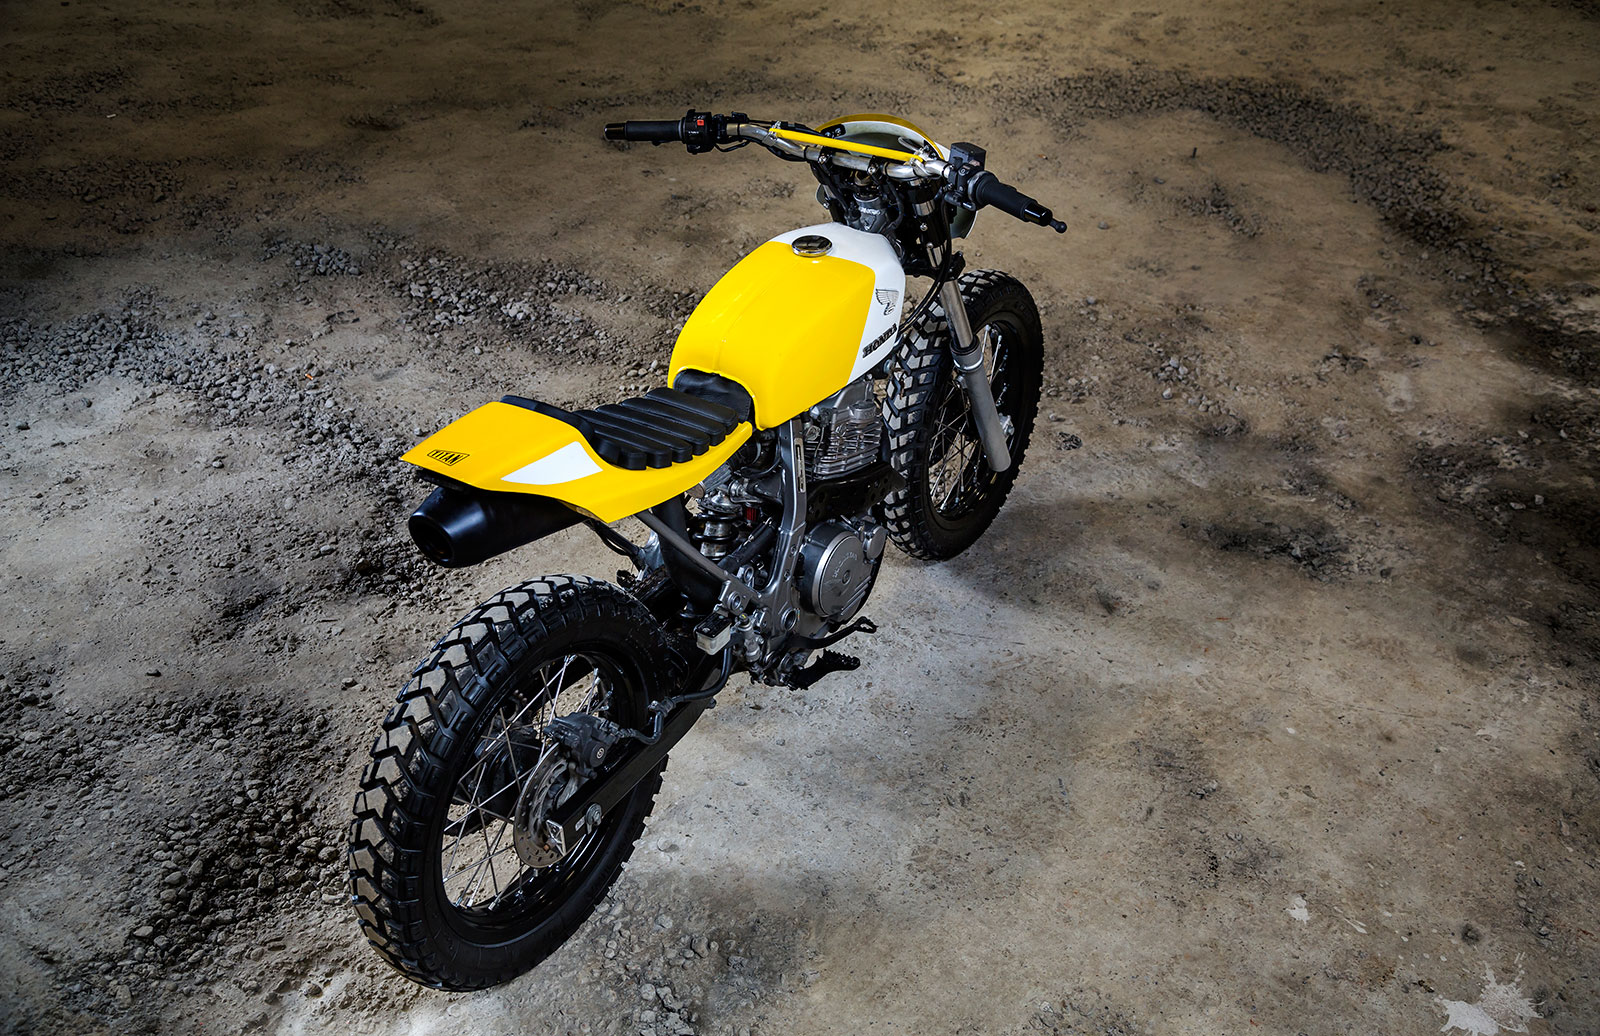 honda-nx650-dominator-by-titan-motorcycles-02